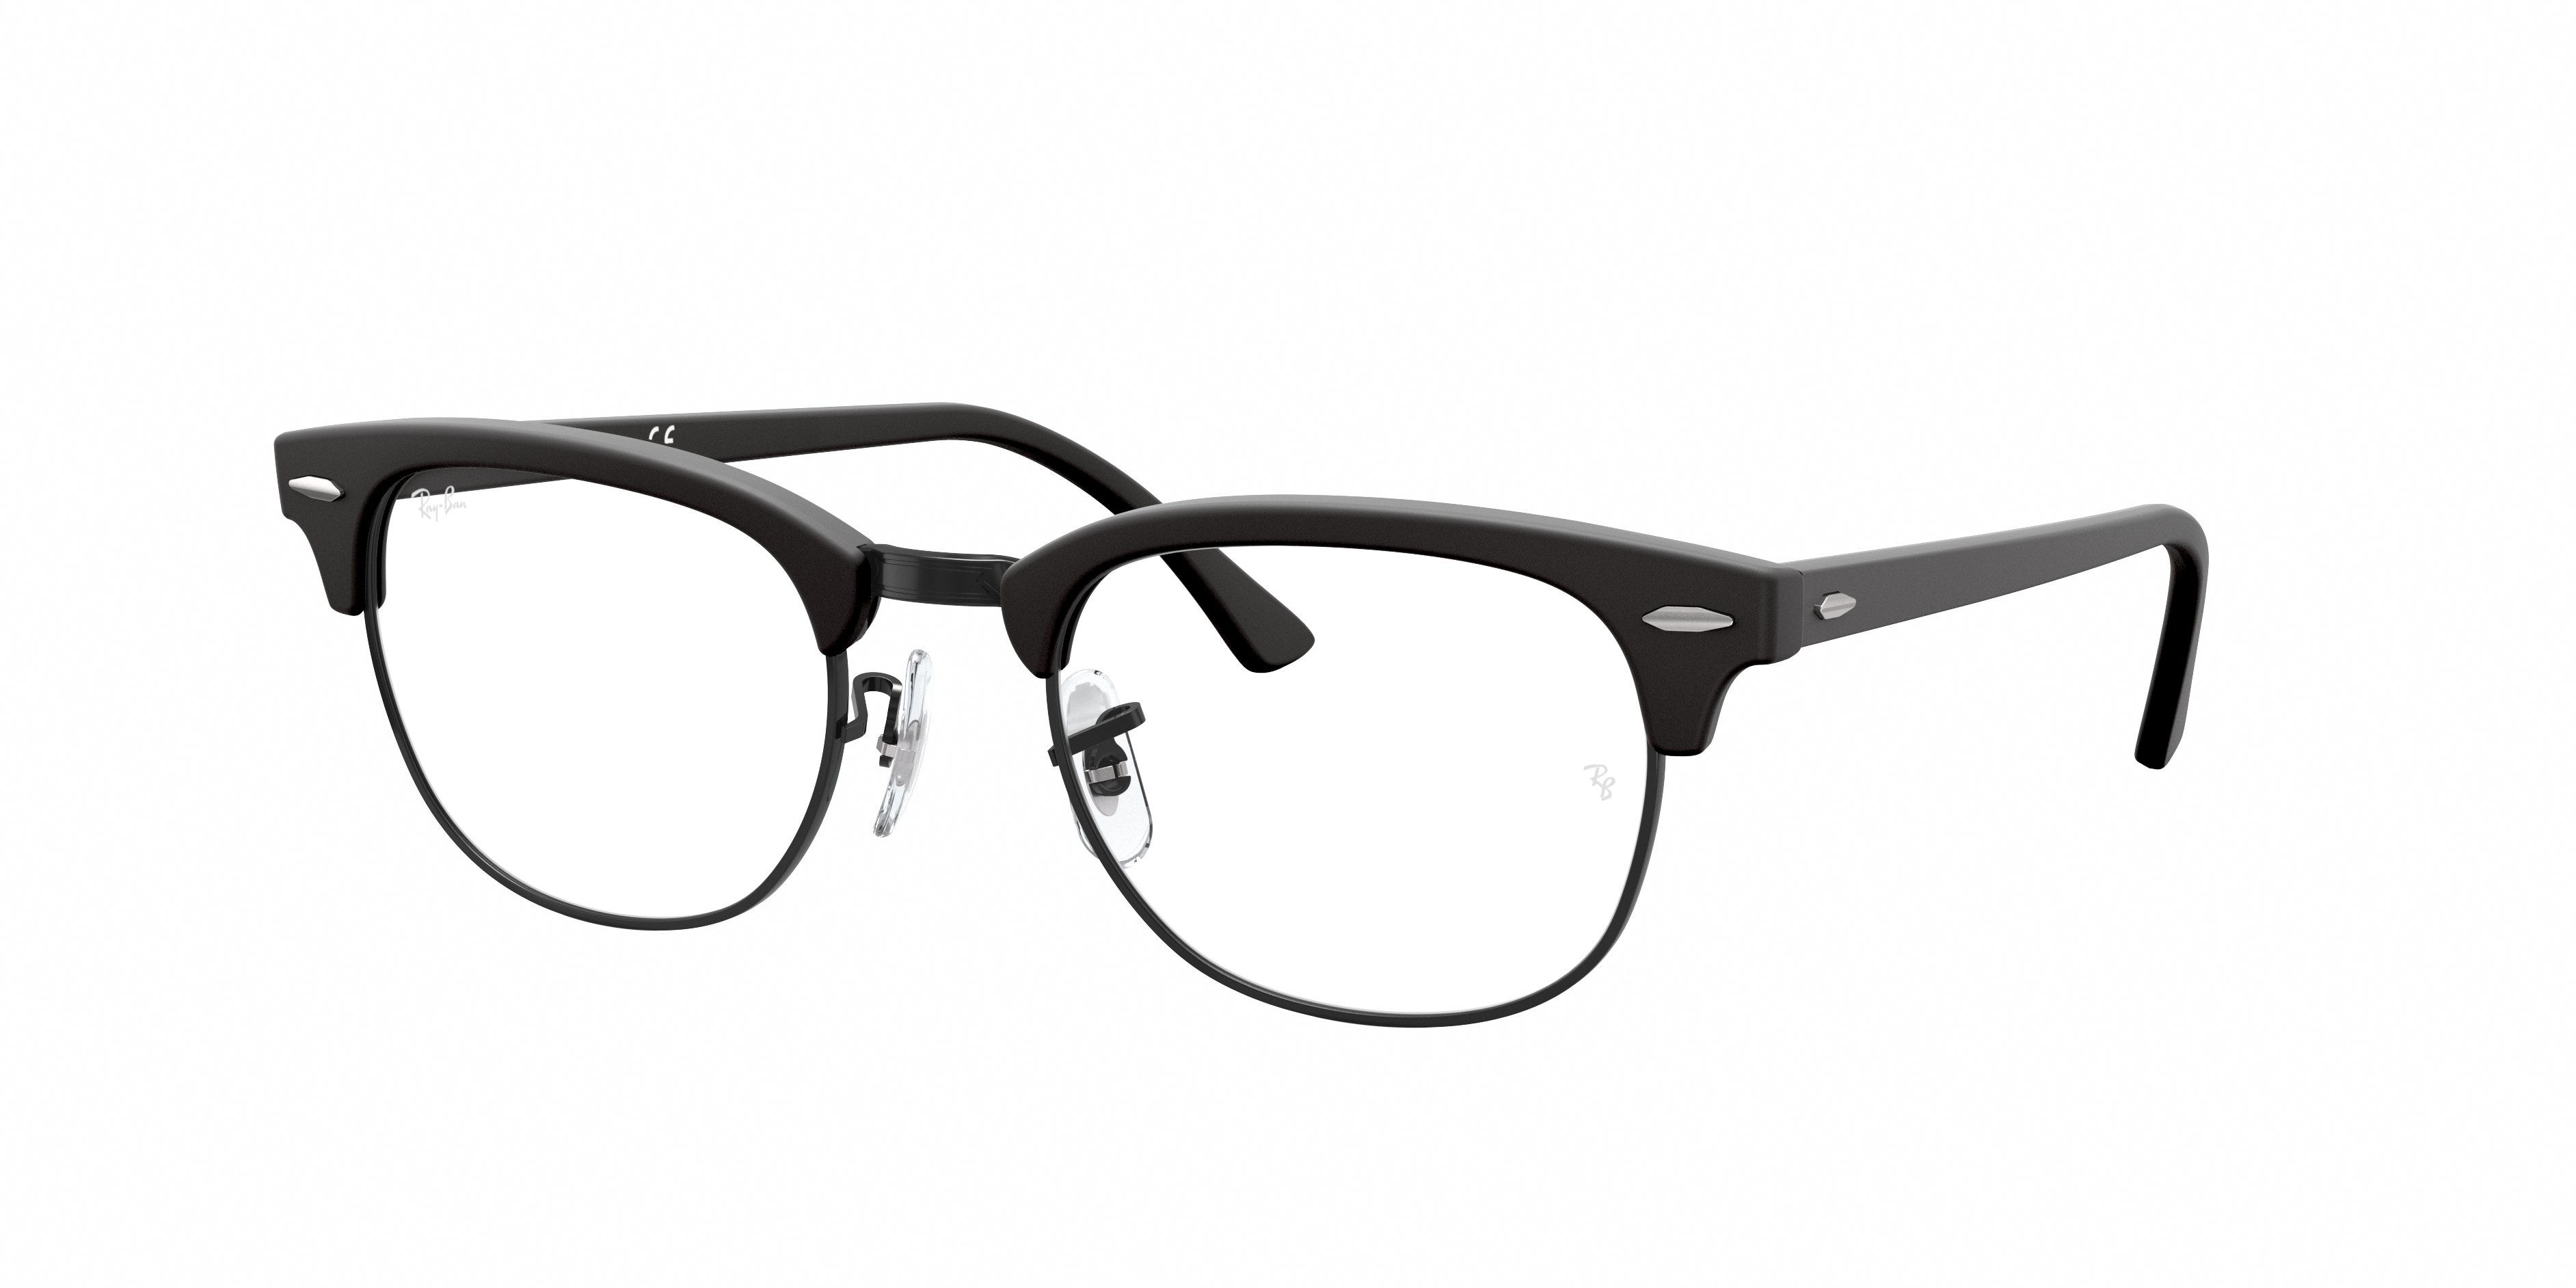 Knooppunt klep is er Clubmaster Optics Eyeglasses with Black Frame | Ray-Ban®